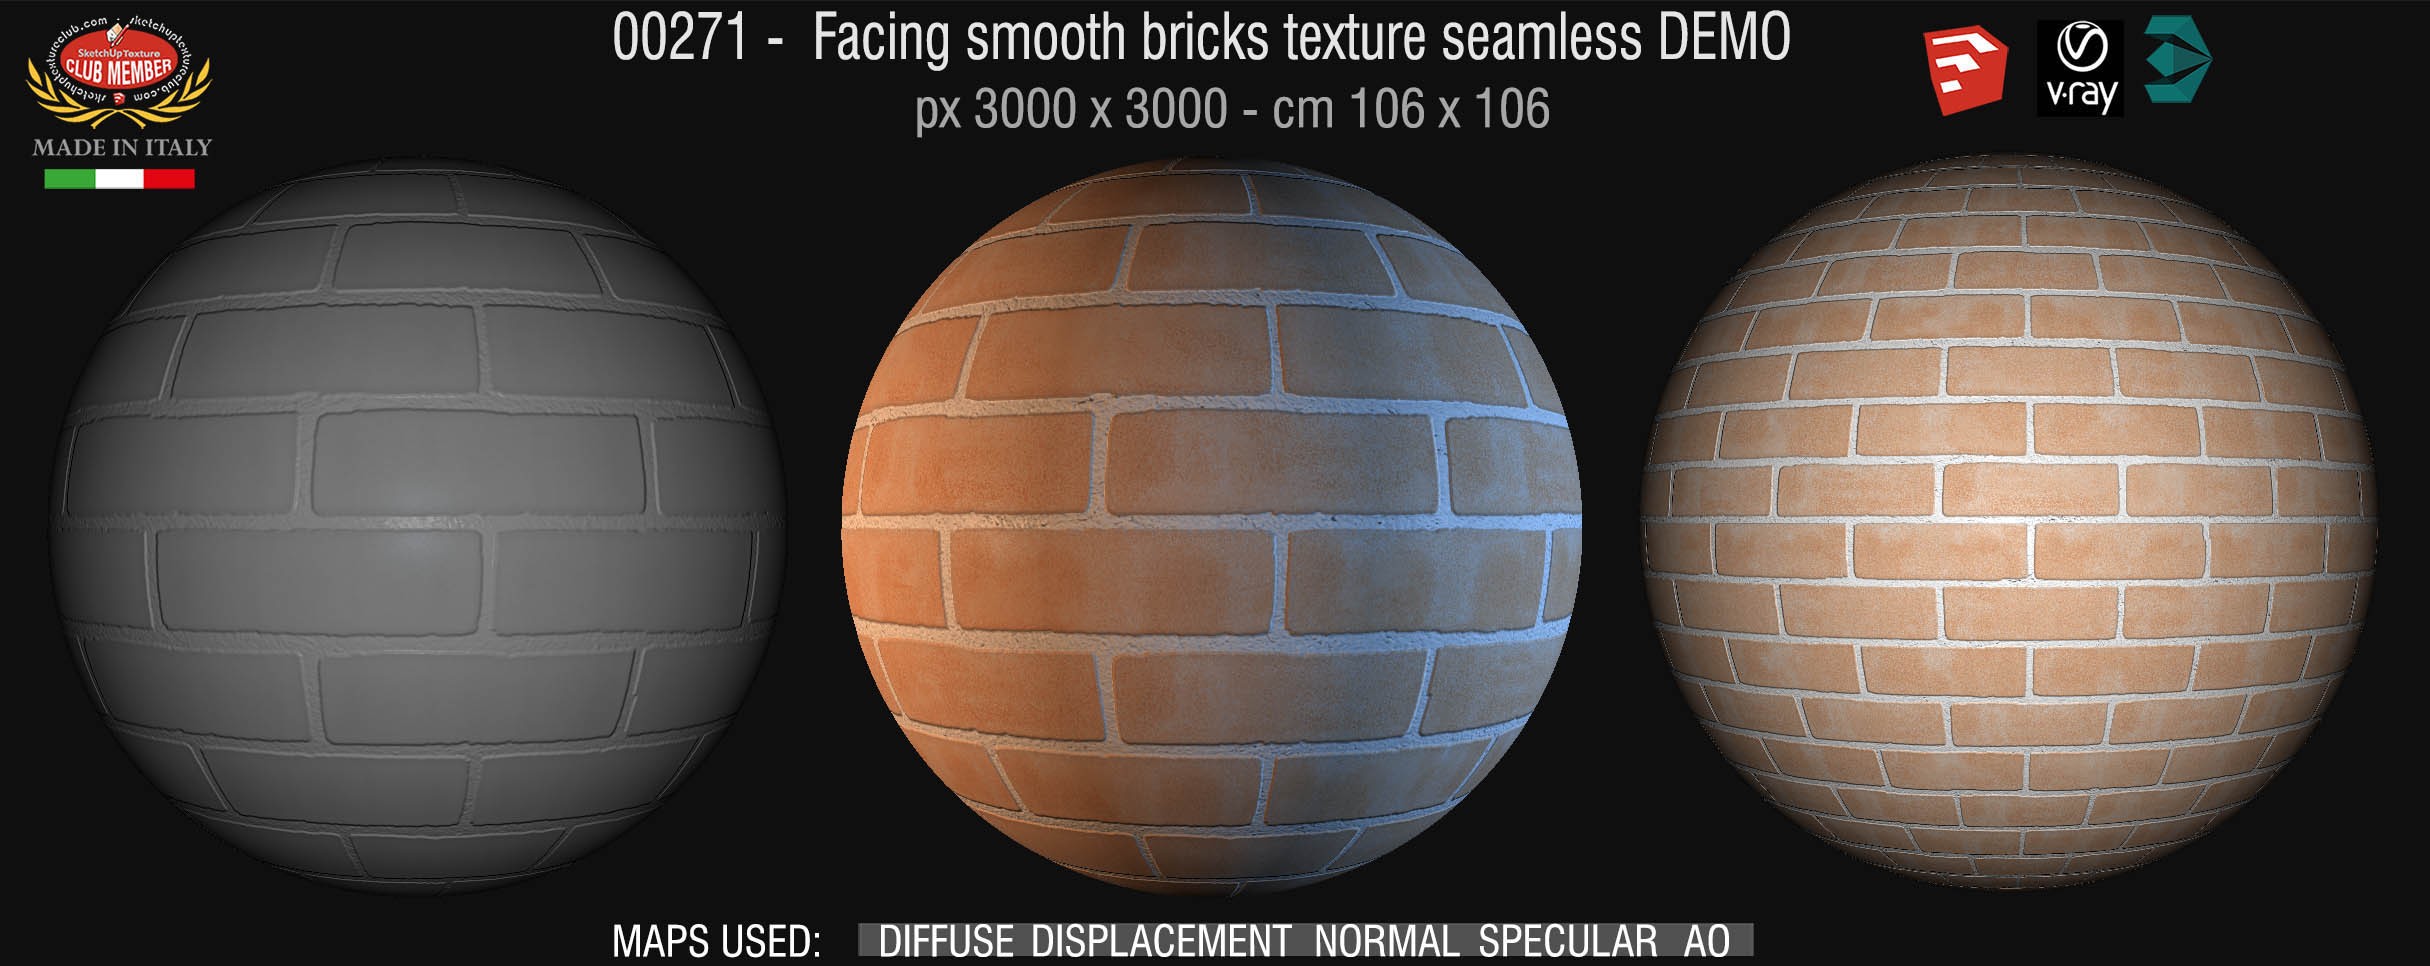 00271 Facing smooth bricks texture seamless + maps DEMO